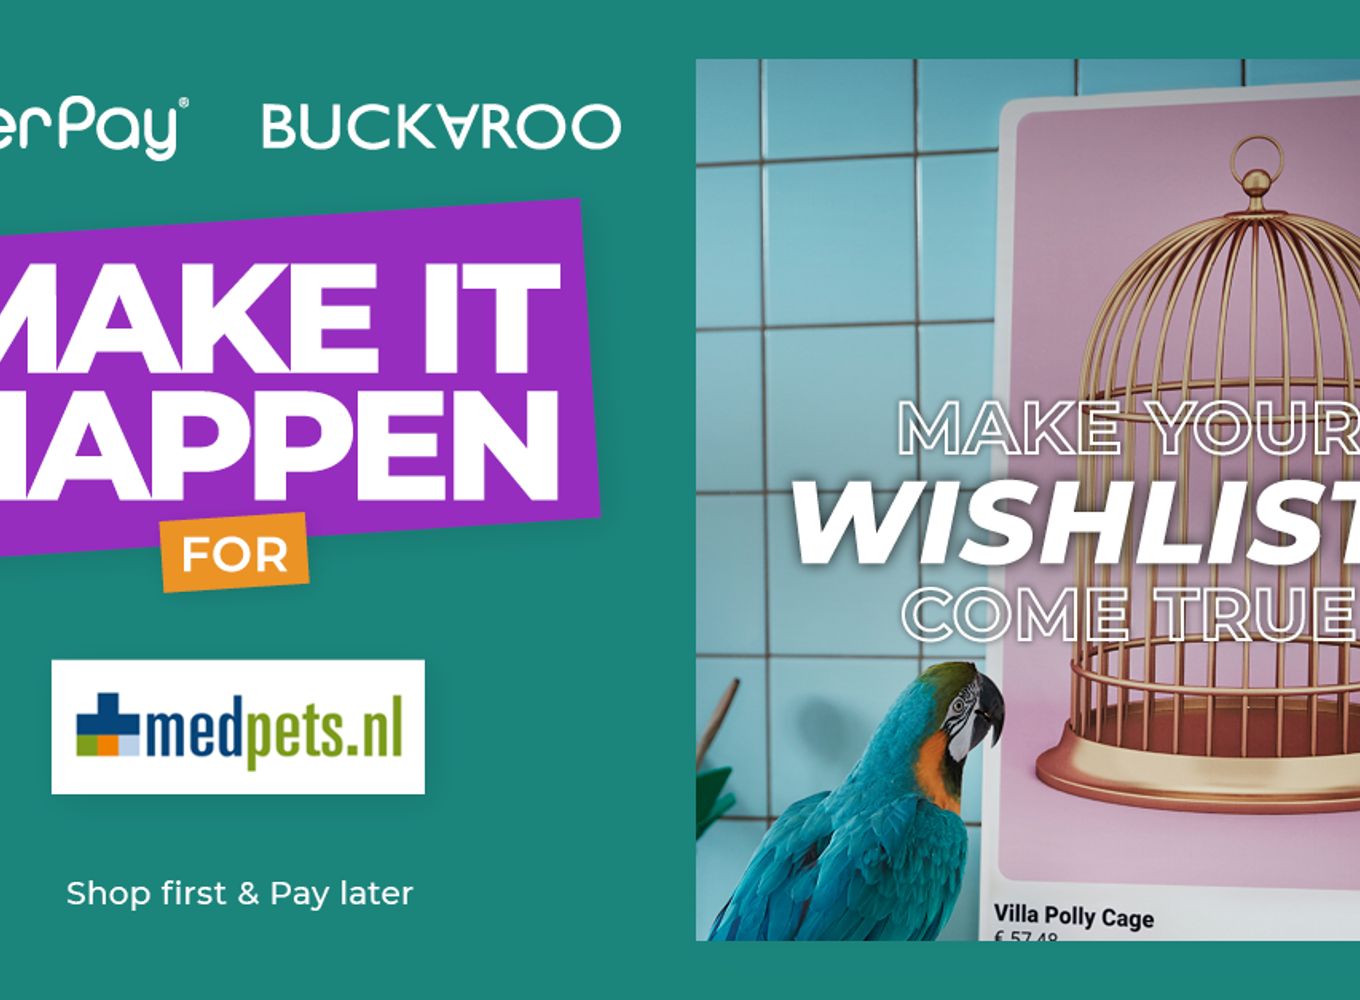 Make it happen campagne afterpay in samenwerking met MedPets en Buckaroo